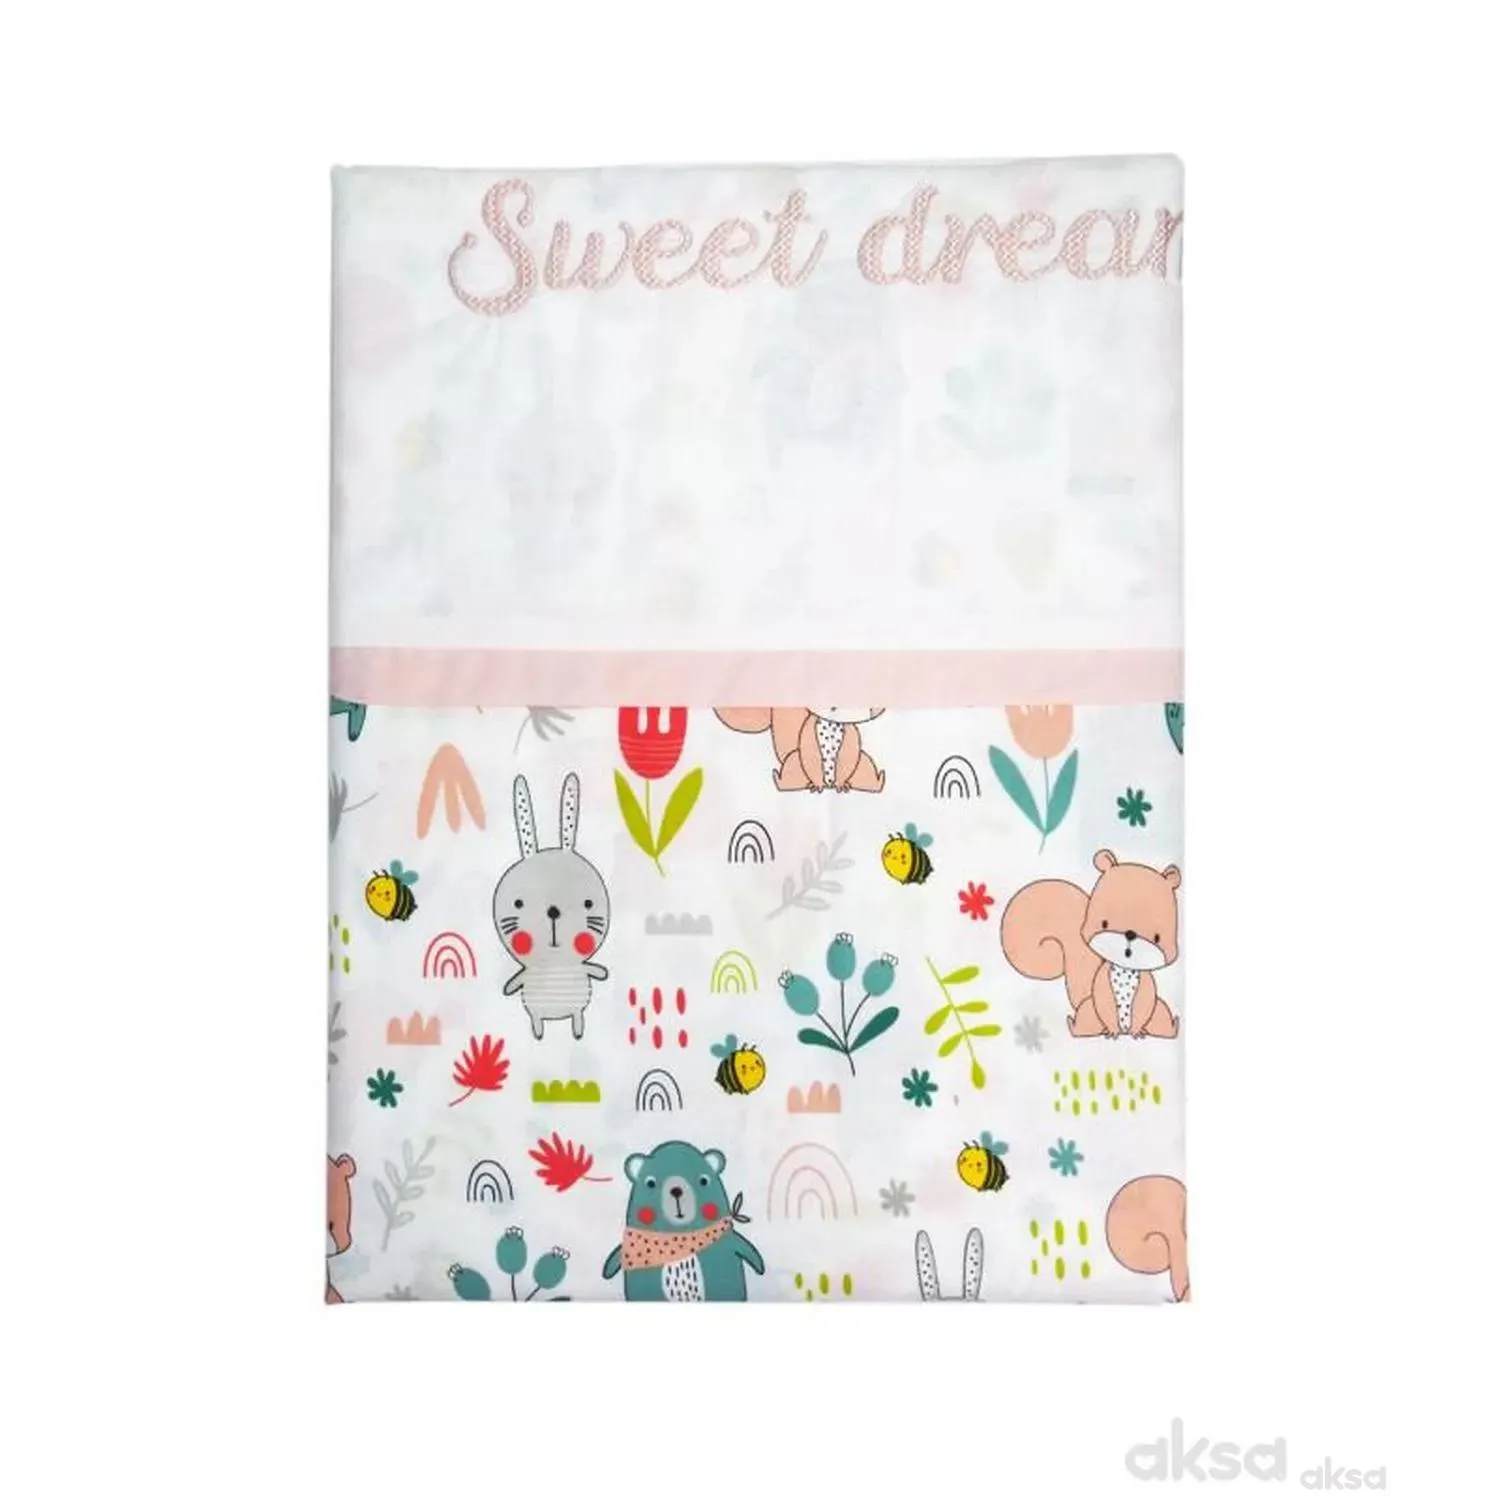 Lillo&Pippo jorganska navlaka Sweet Dreams 80x120 